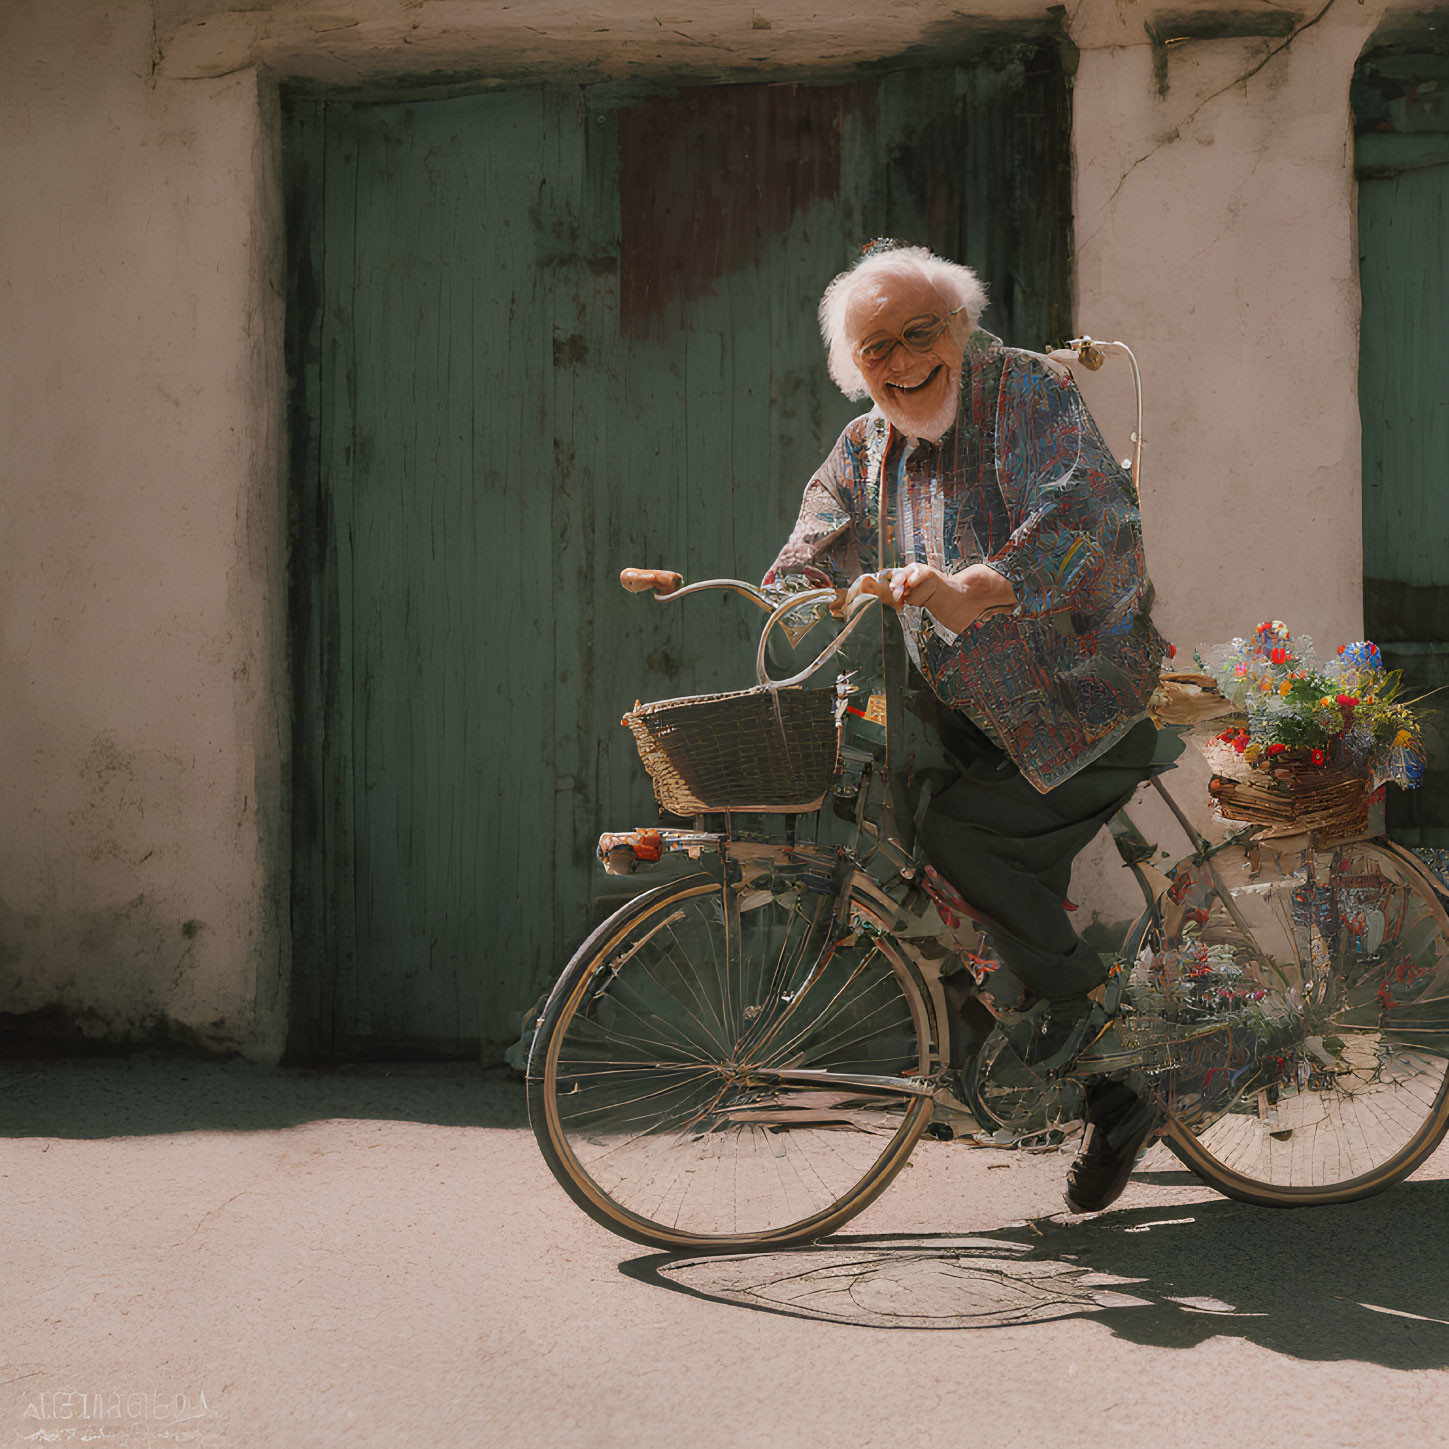 Elderly man joyfully rides decorated bicycle by rustic teal door